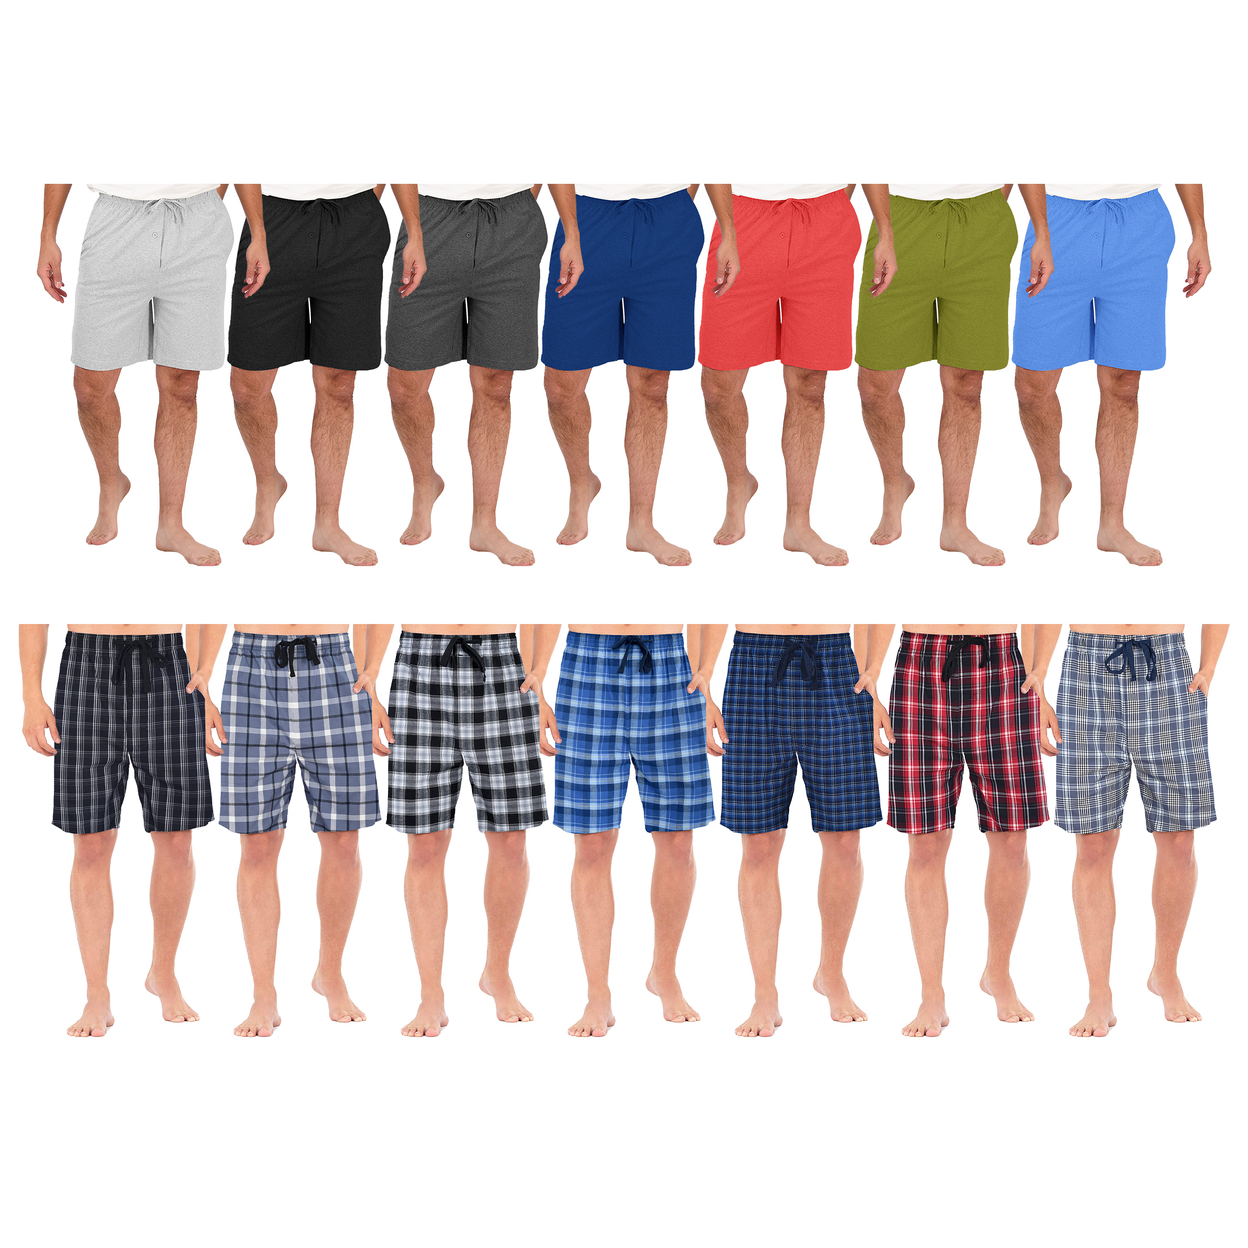 Multi-Pack: Men's Ultra Soft Knit Lounge Pajama Sleep Shorts - Plaid, 1-pack, Large